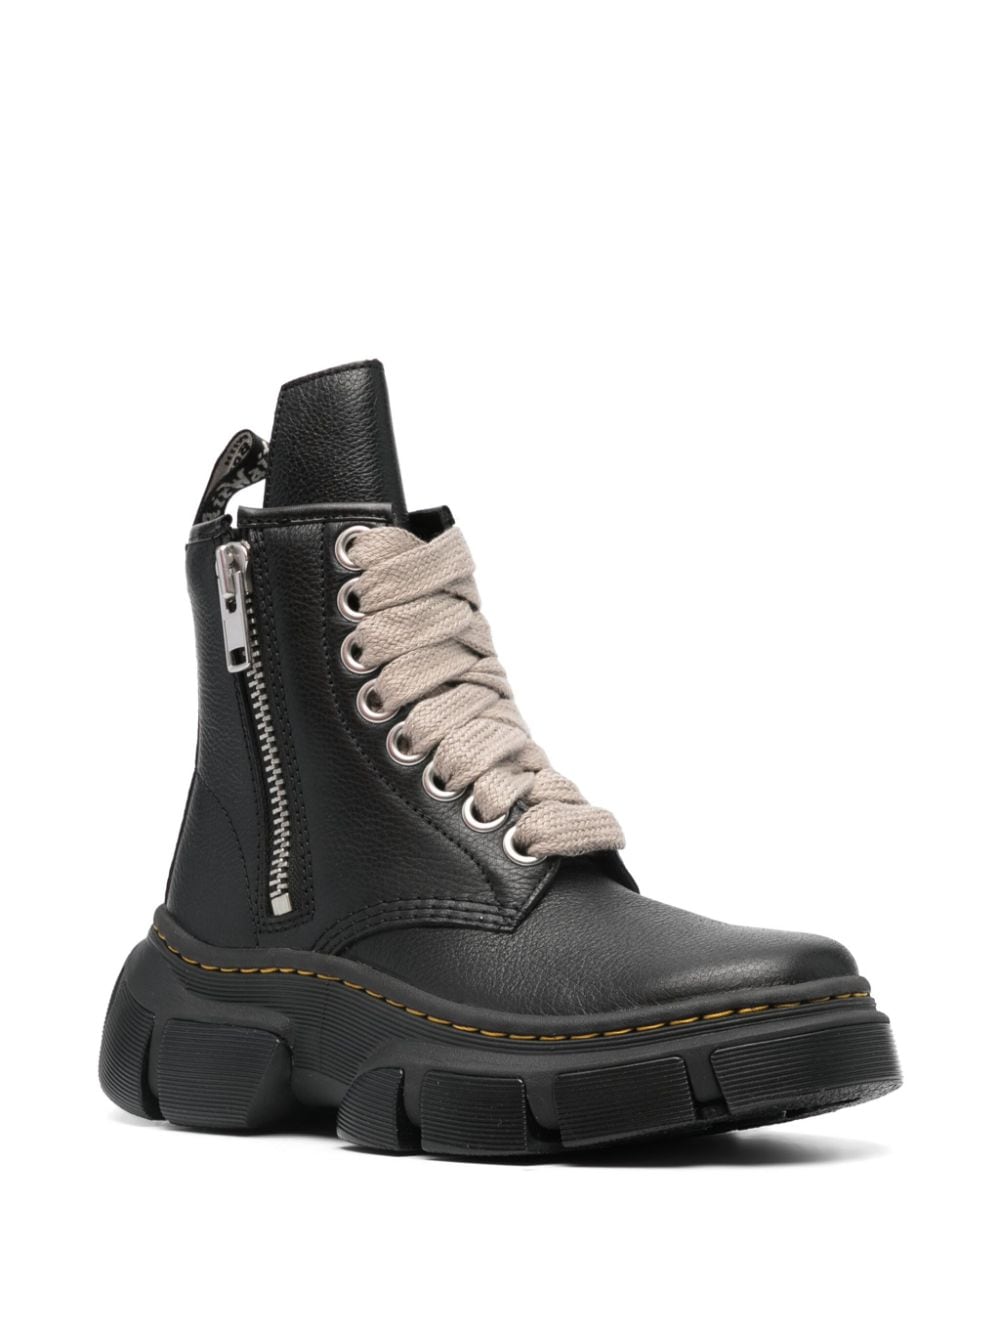 Dr. Martens x Rick Owens 1460 leather boots Black